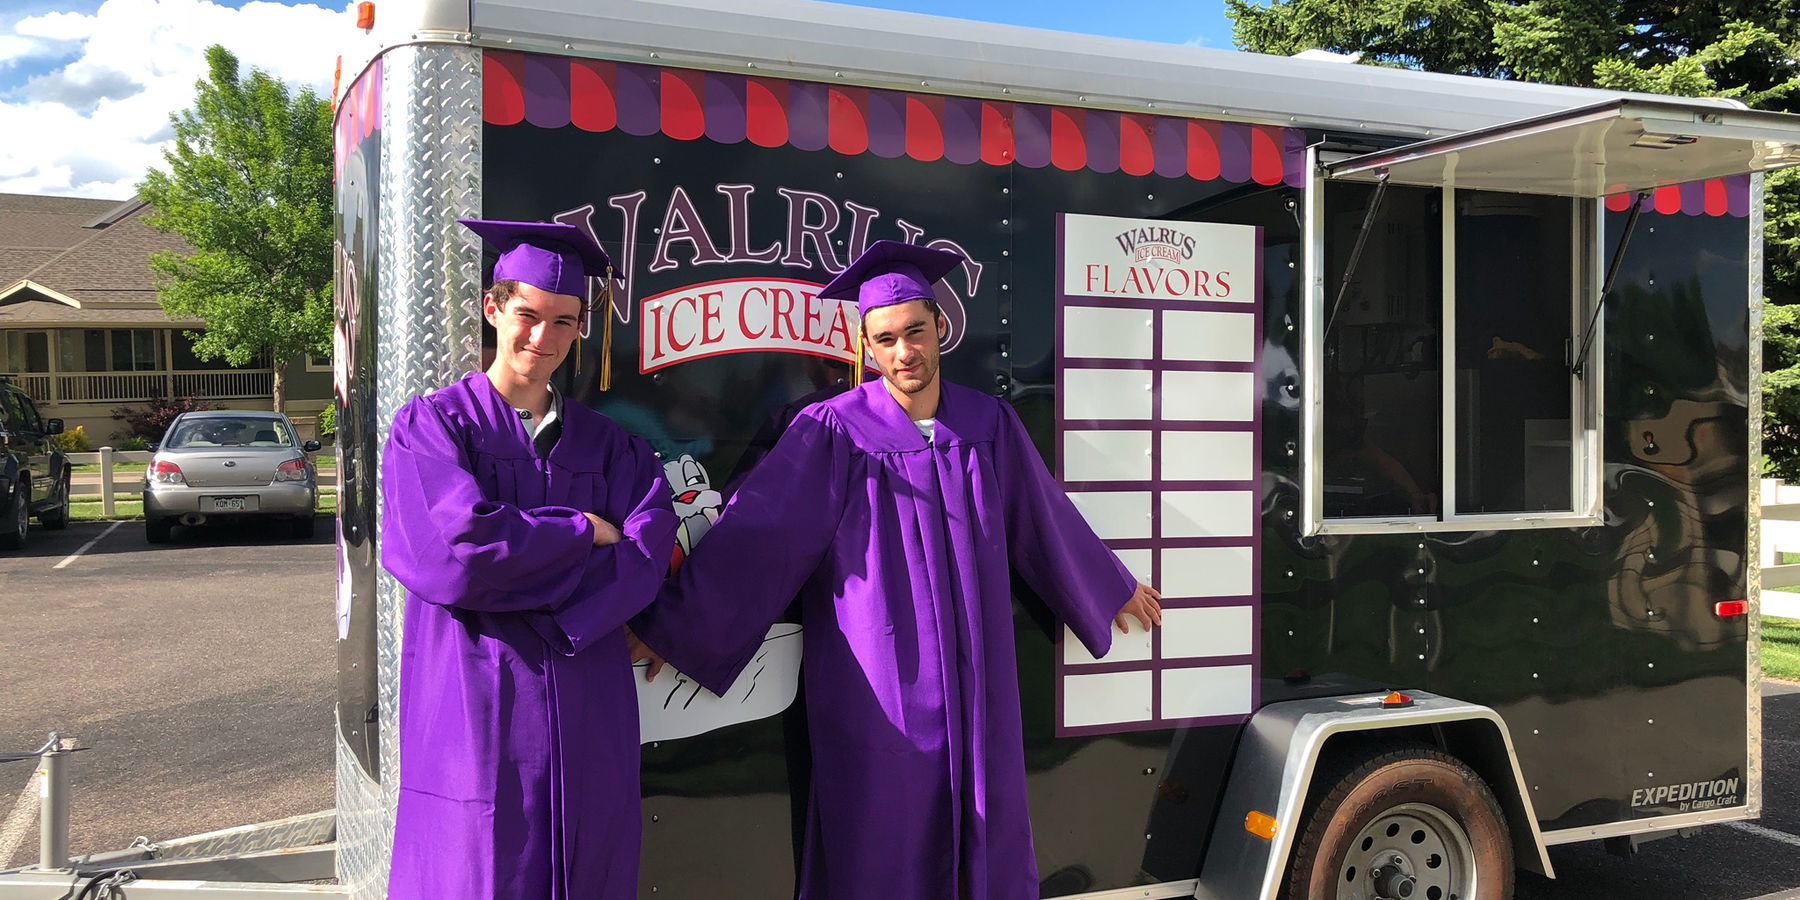 College Grads in their purple robes